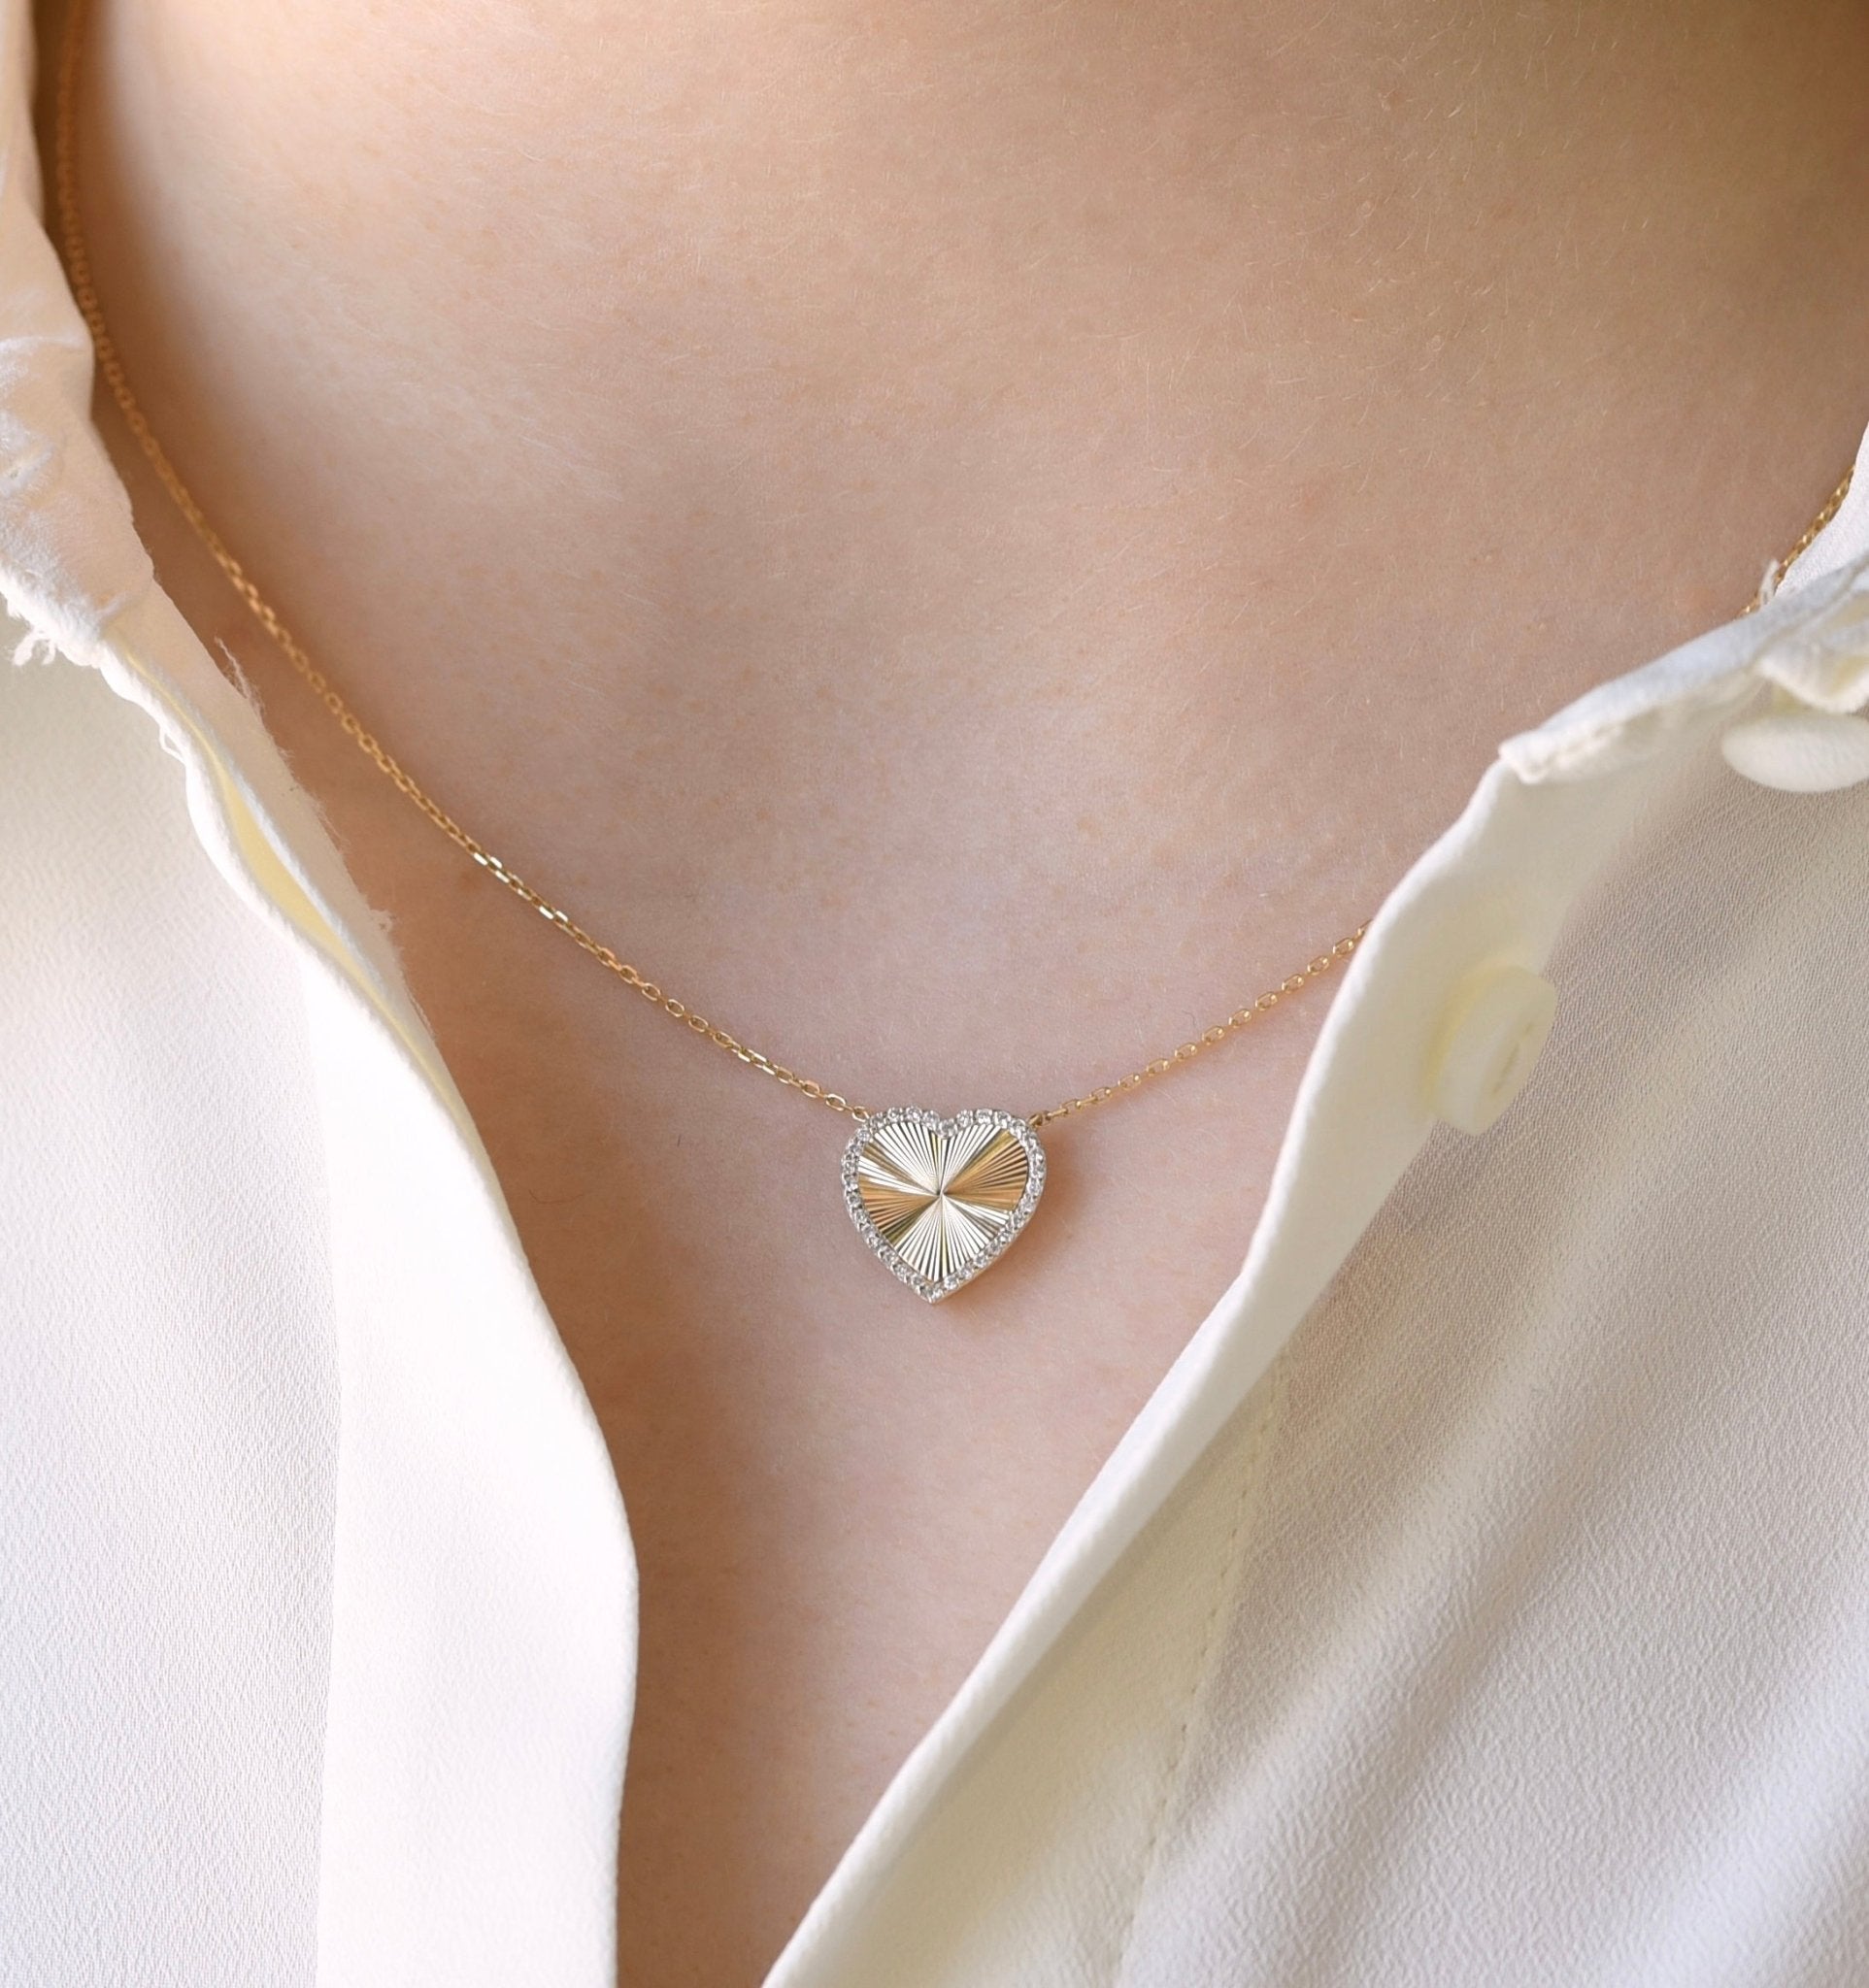 Shiny Heart Necklace - 18k Gold - Lynor